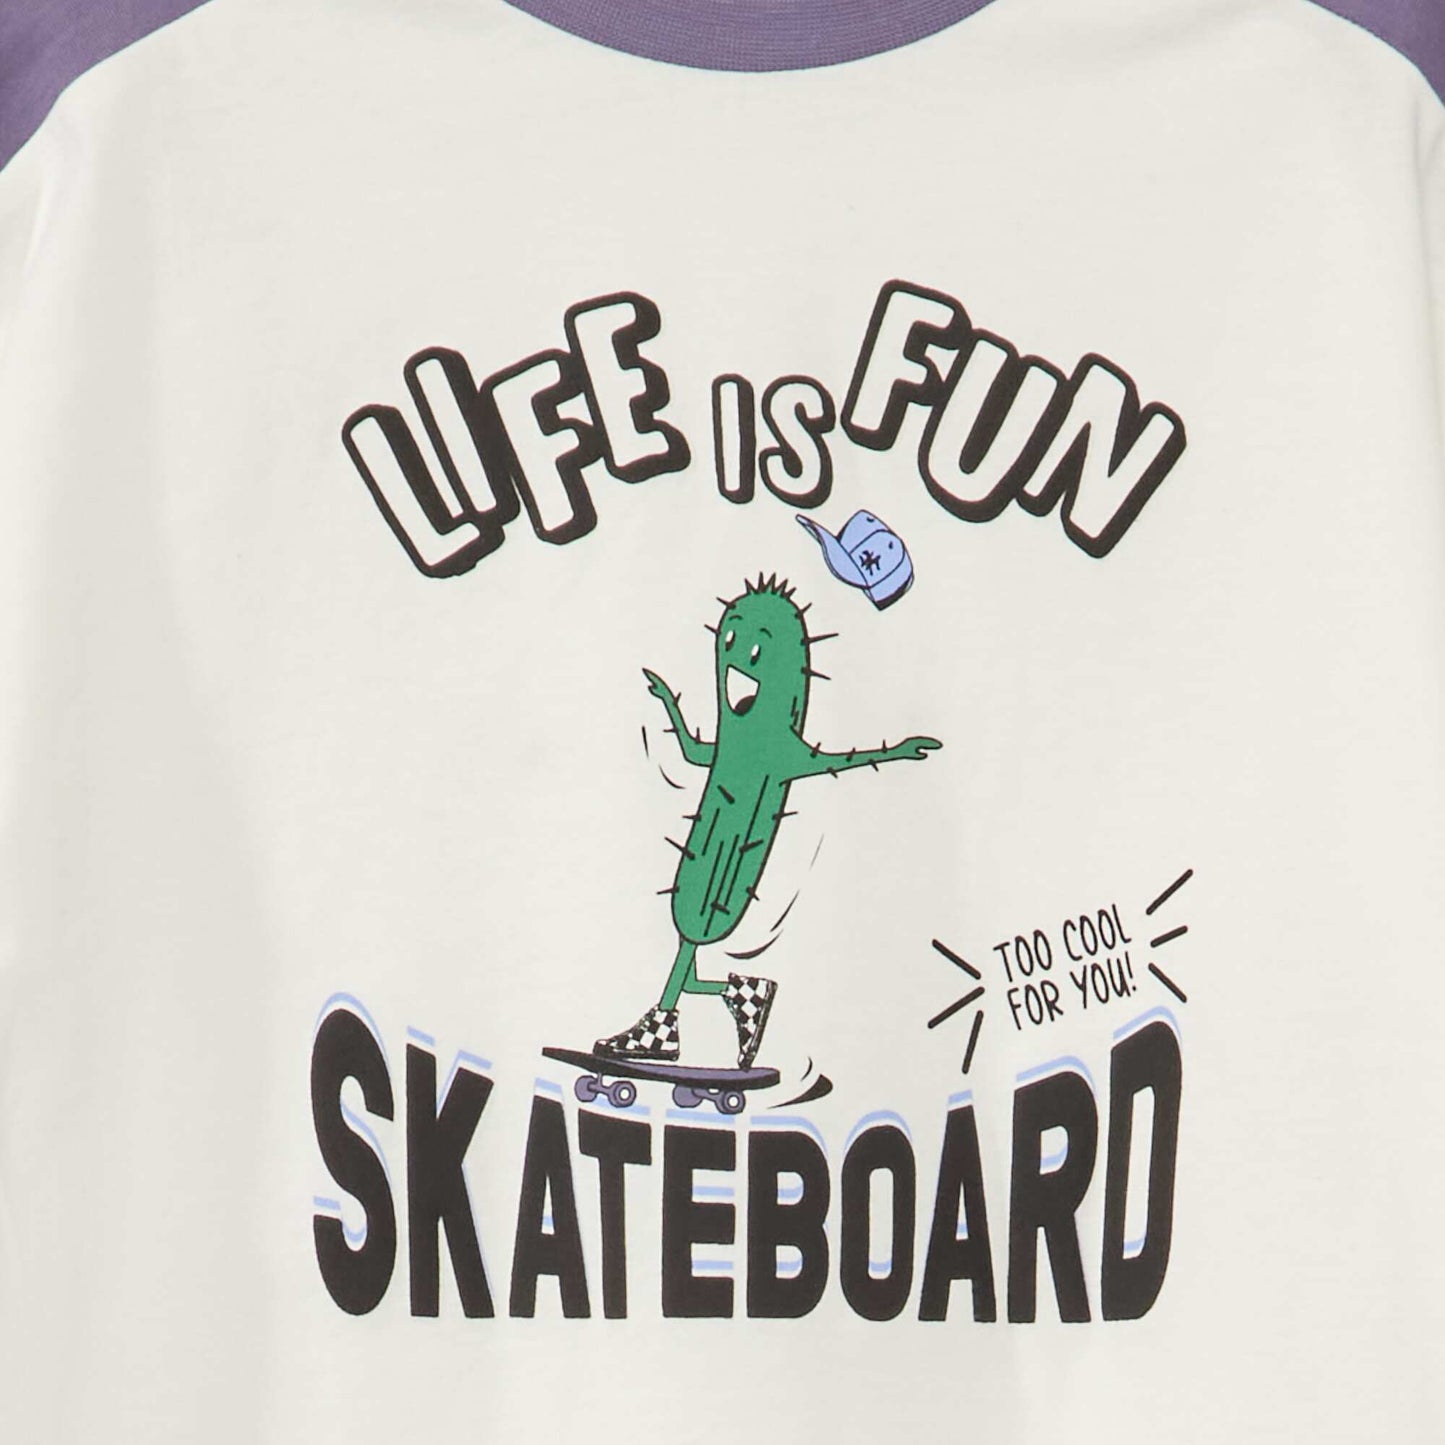 T-shirt manches courtes 'Skate' Violet